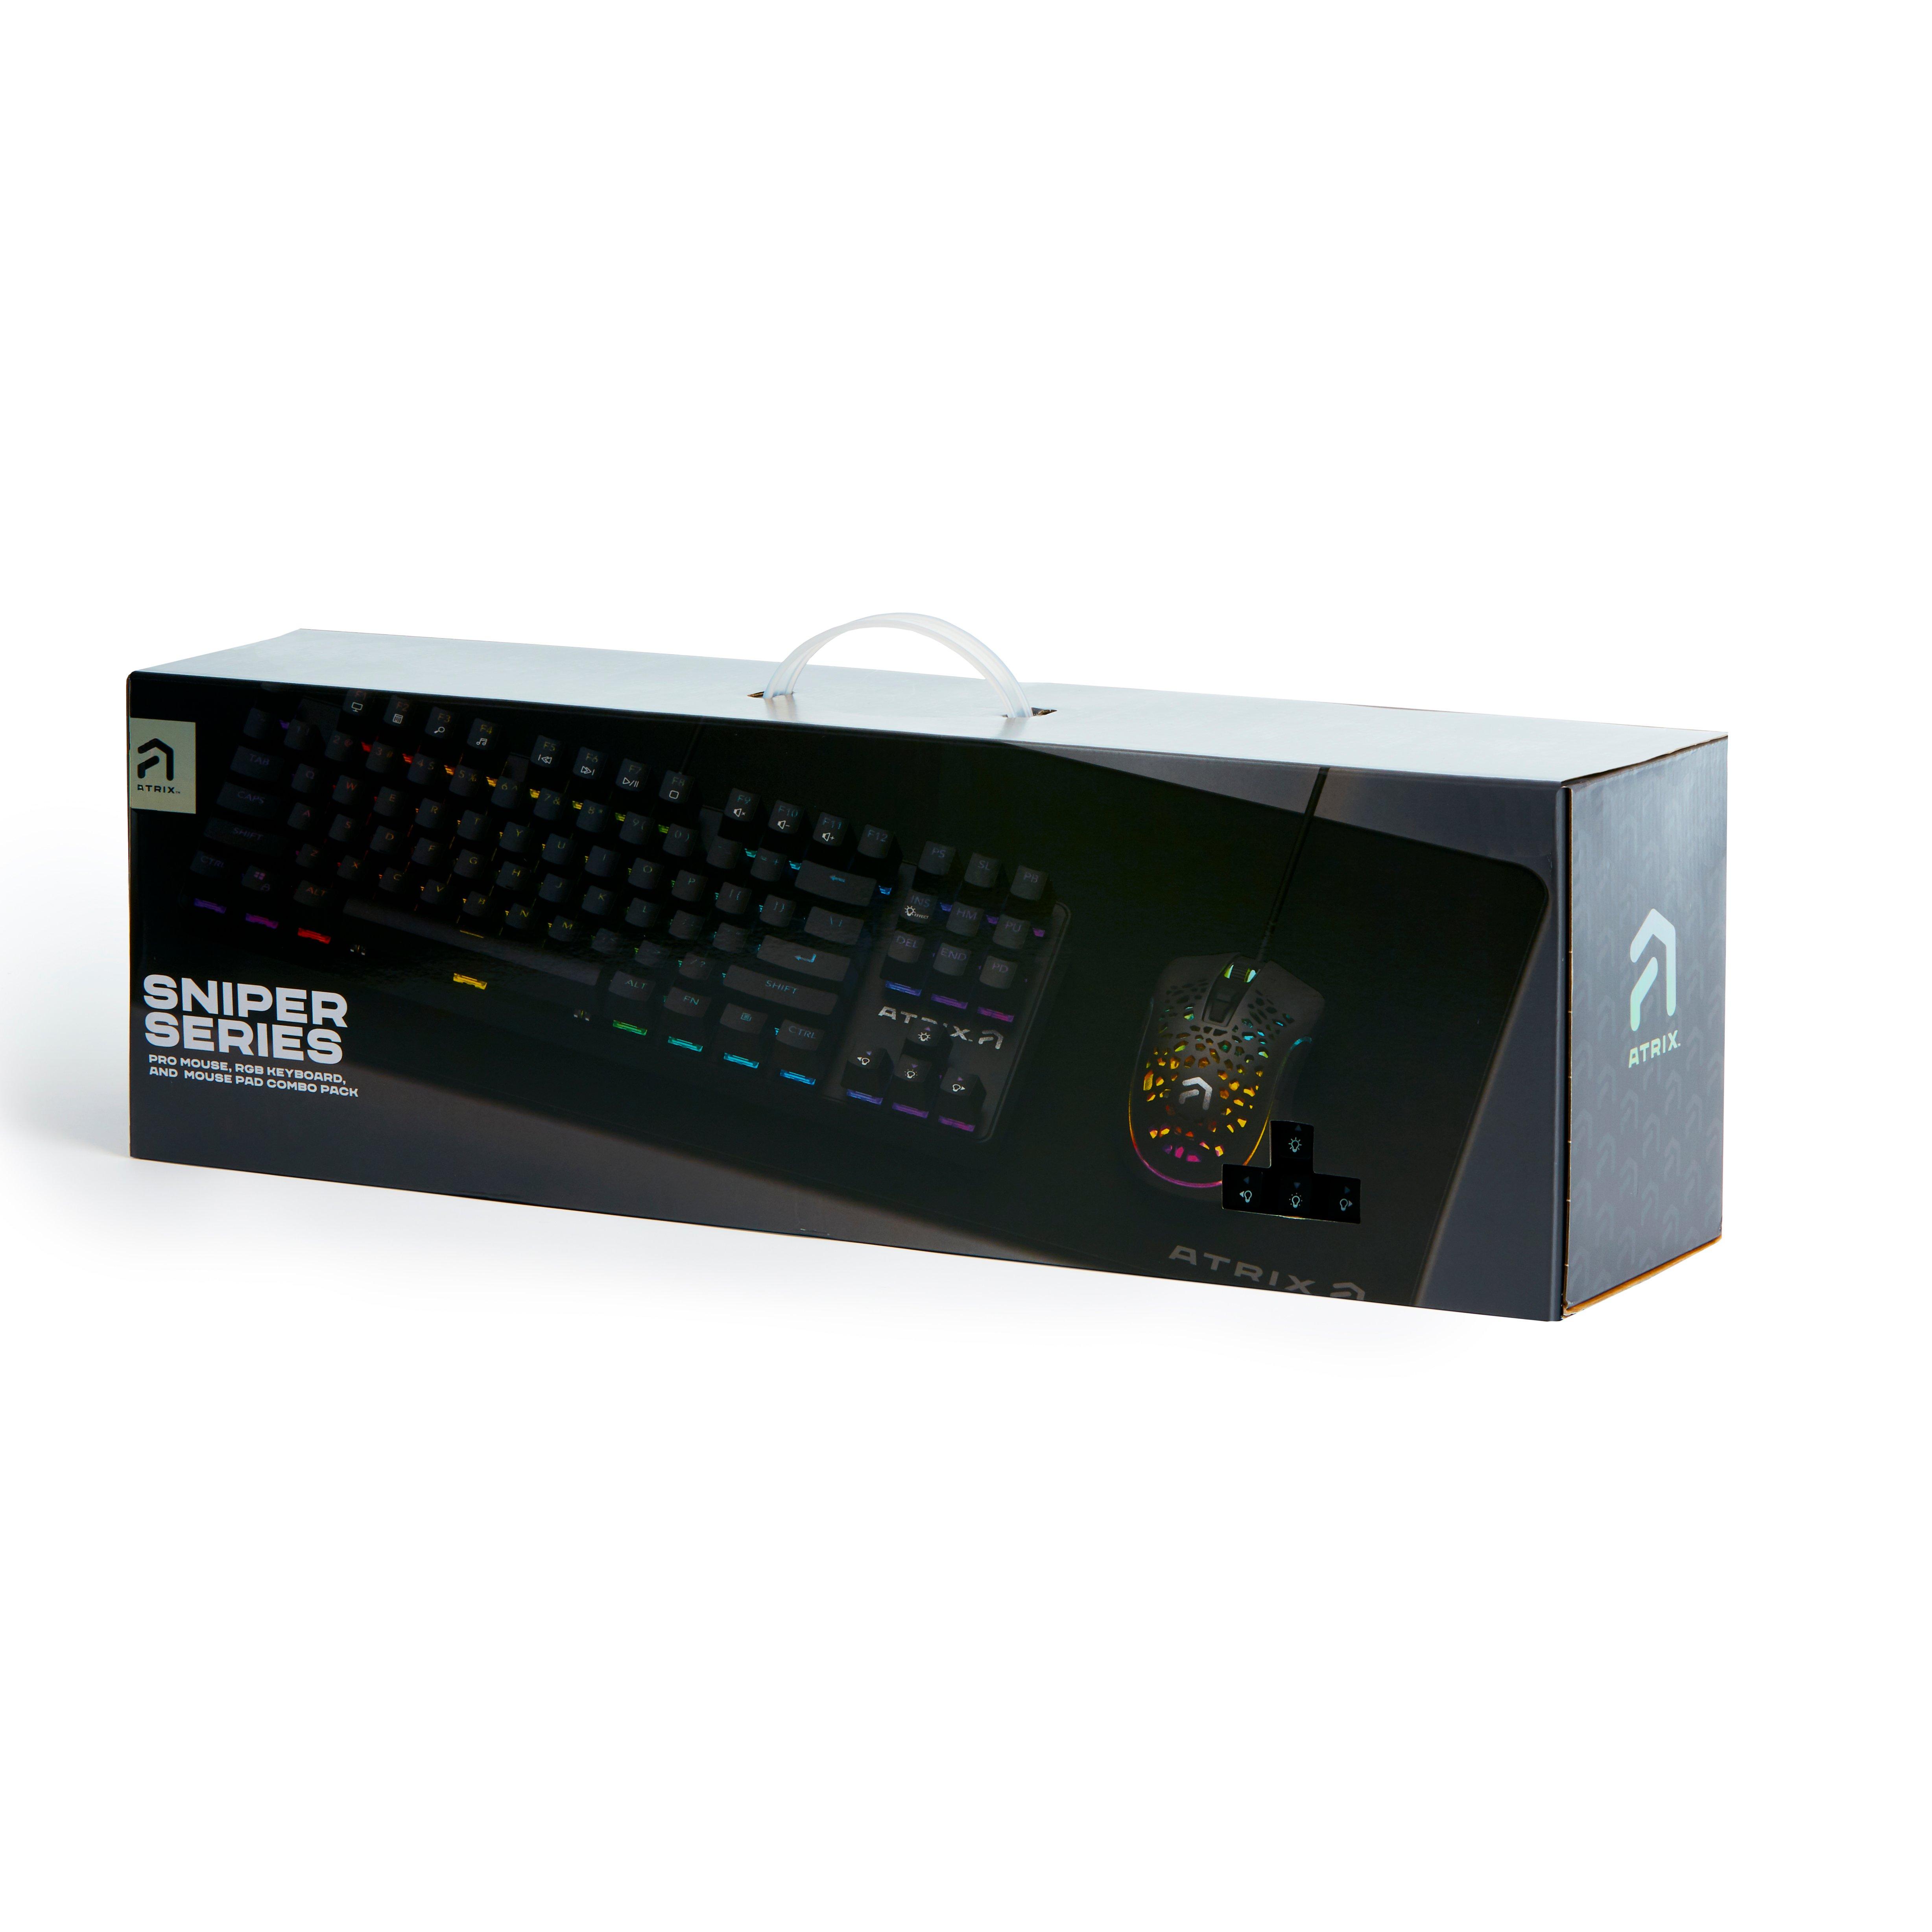 Atrix Sniper Series PC Keyboard Mouse, and Mousepad Bundle